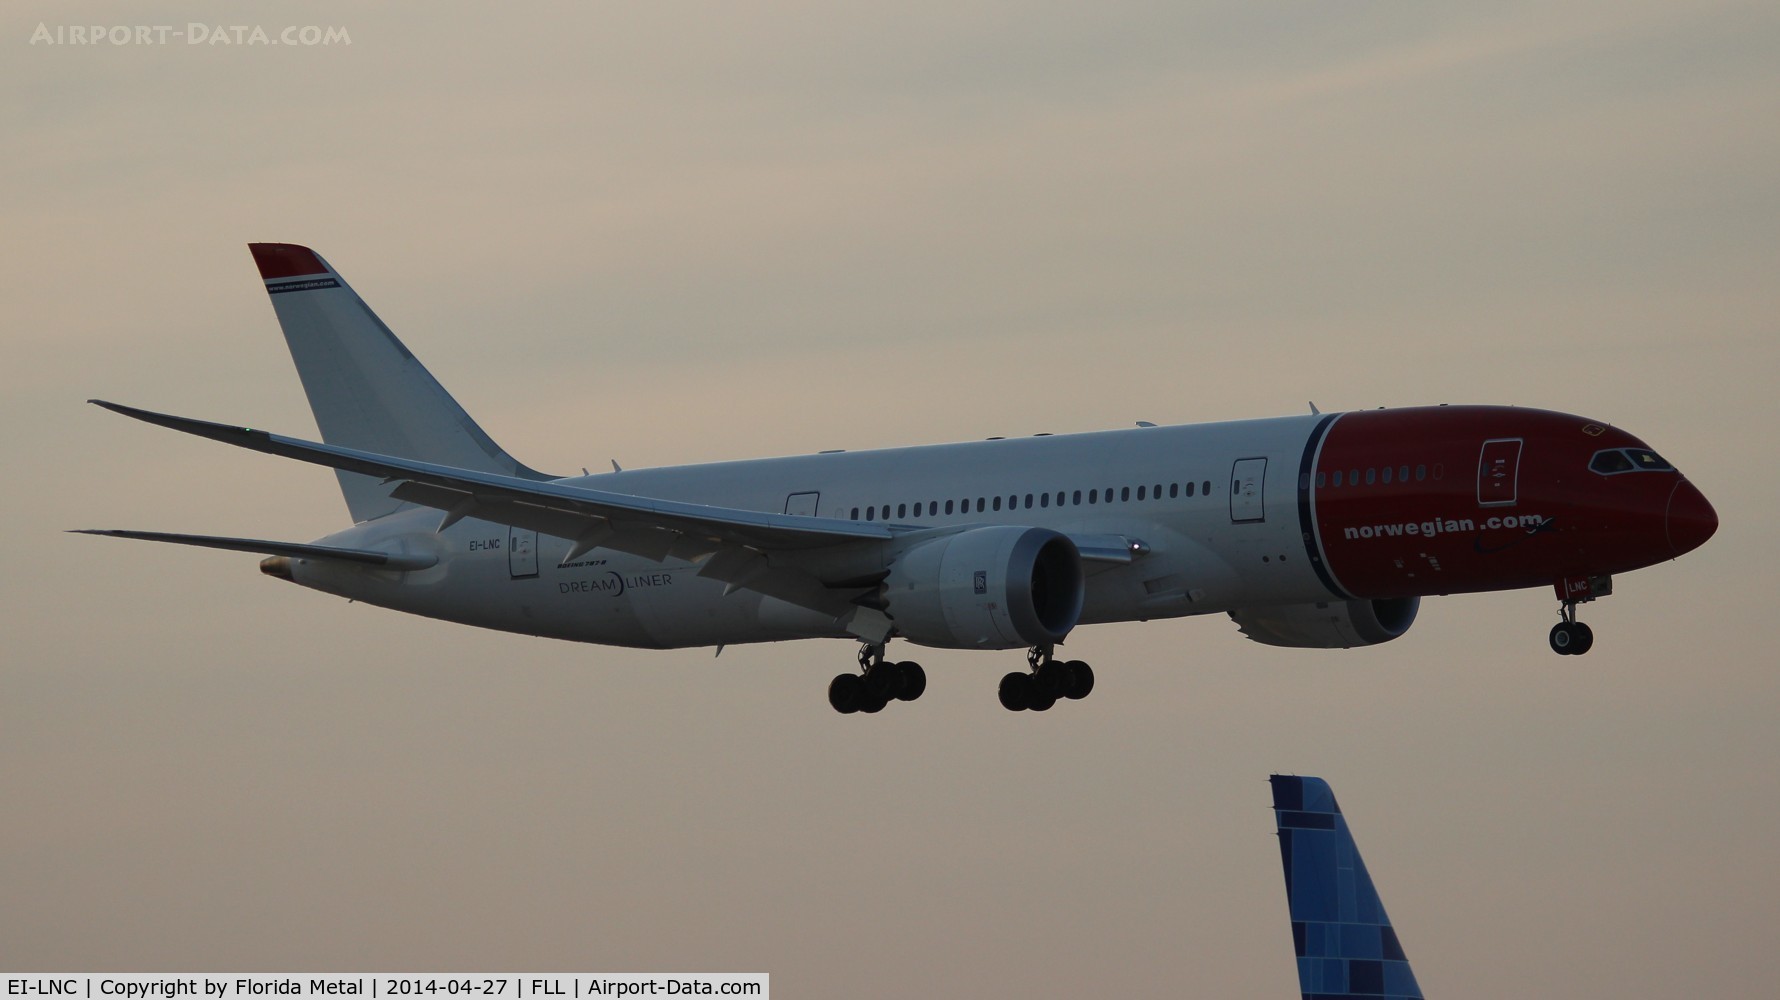 EI-LNC, 2013 Boeing 787-8 Dreamliner C/N 34795, Norwegian 787-800